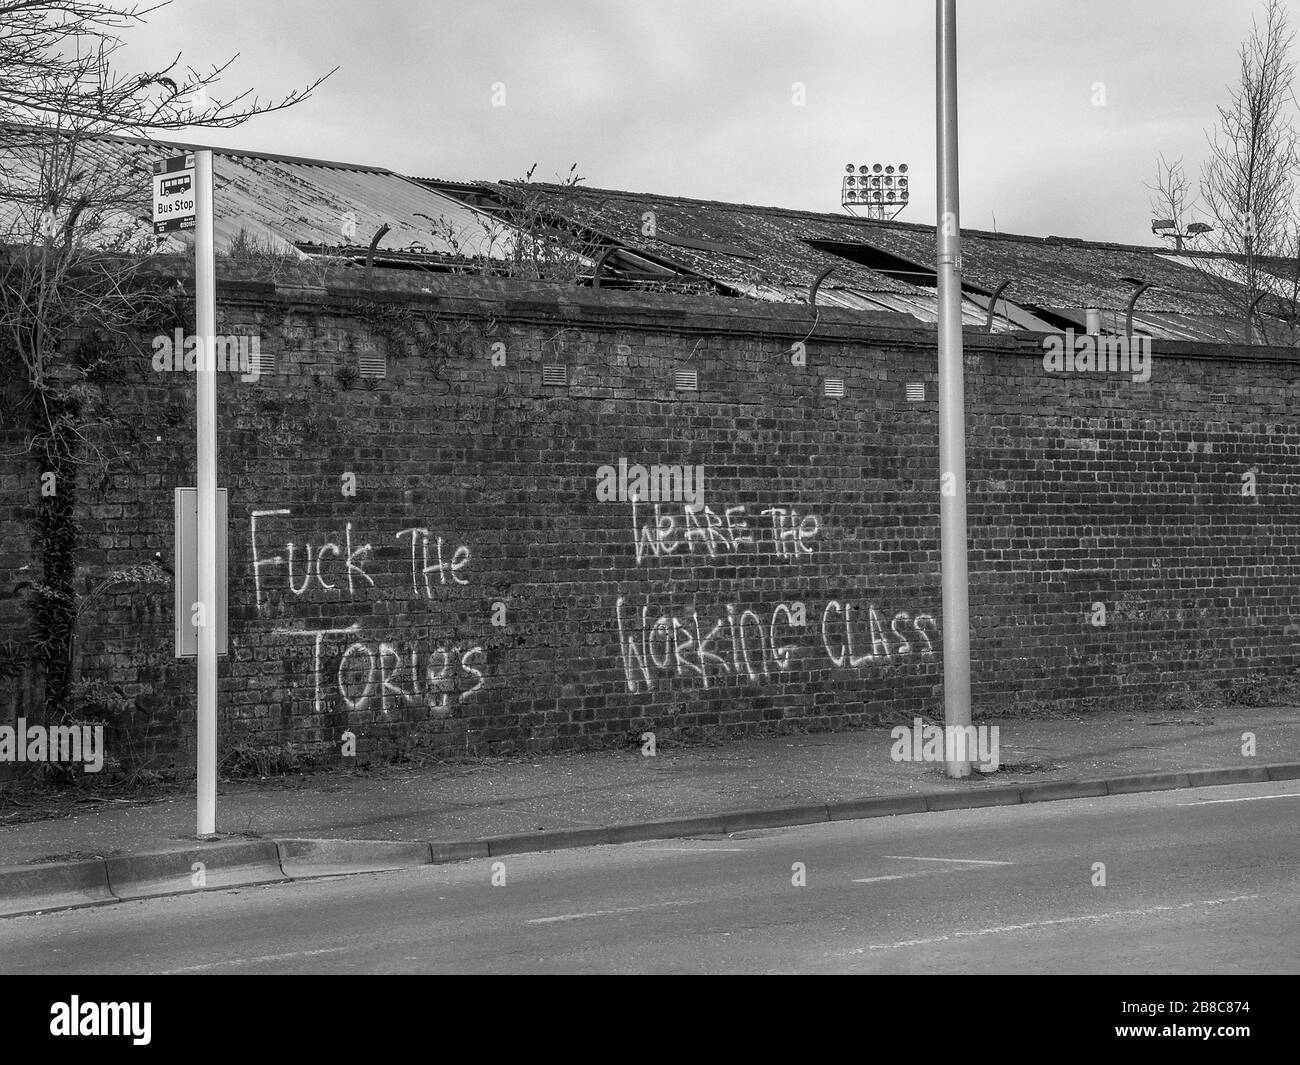 Rutherglen, Scotland, UK. 21st March 2020: Black and White images of an anti- Conservative graffiti on Shawfield stadium brick wall. Stock Photo